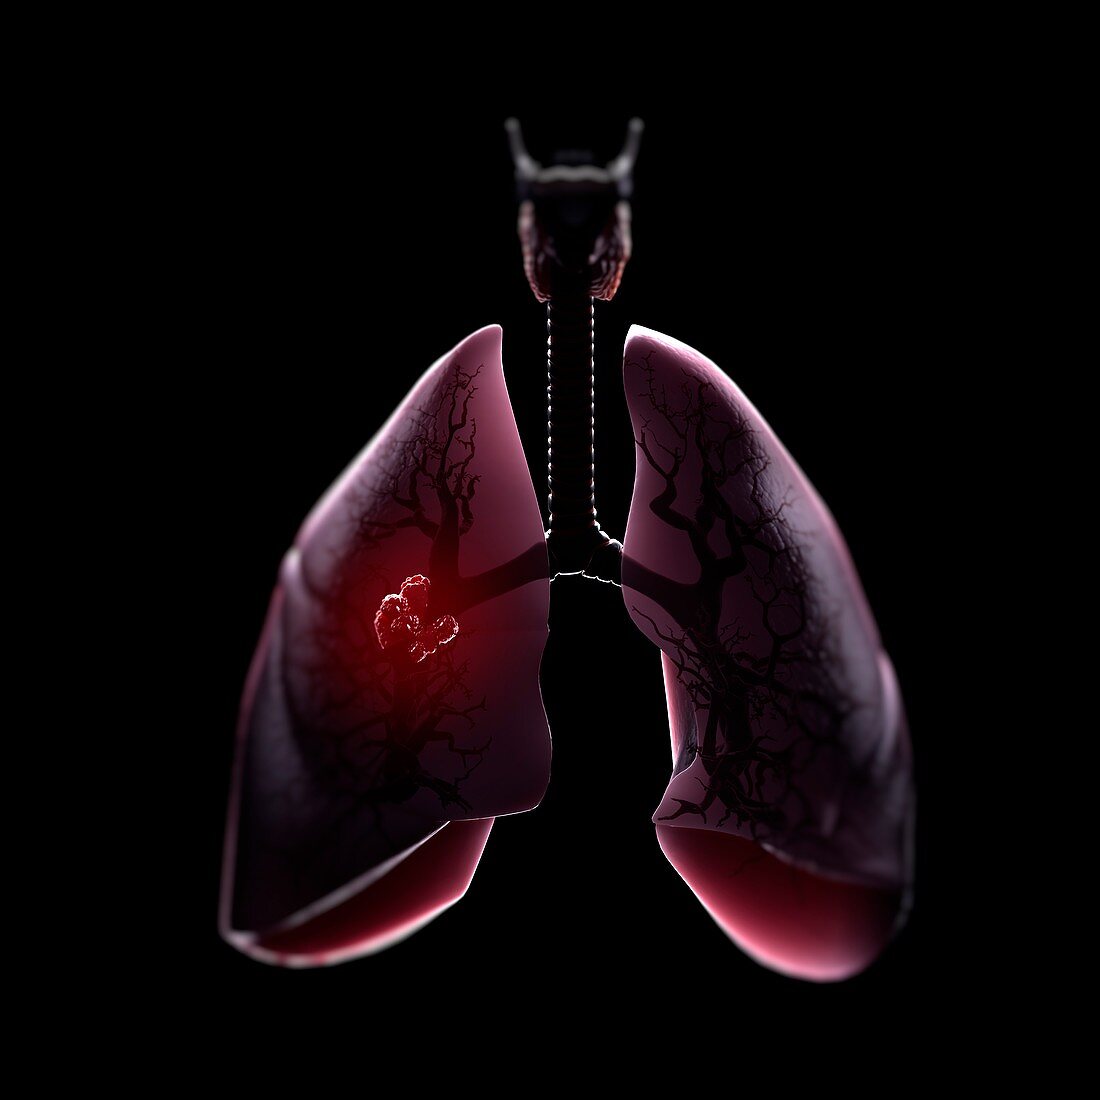 Lung Tumor, artwork